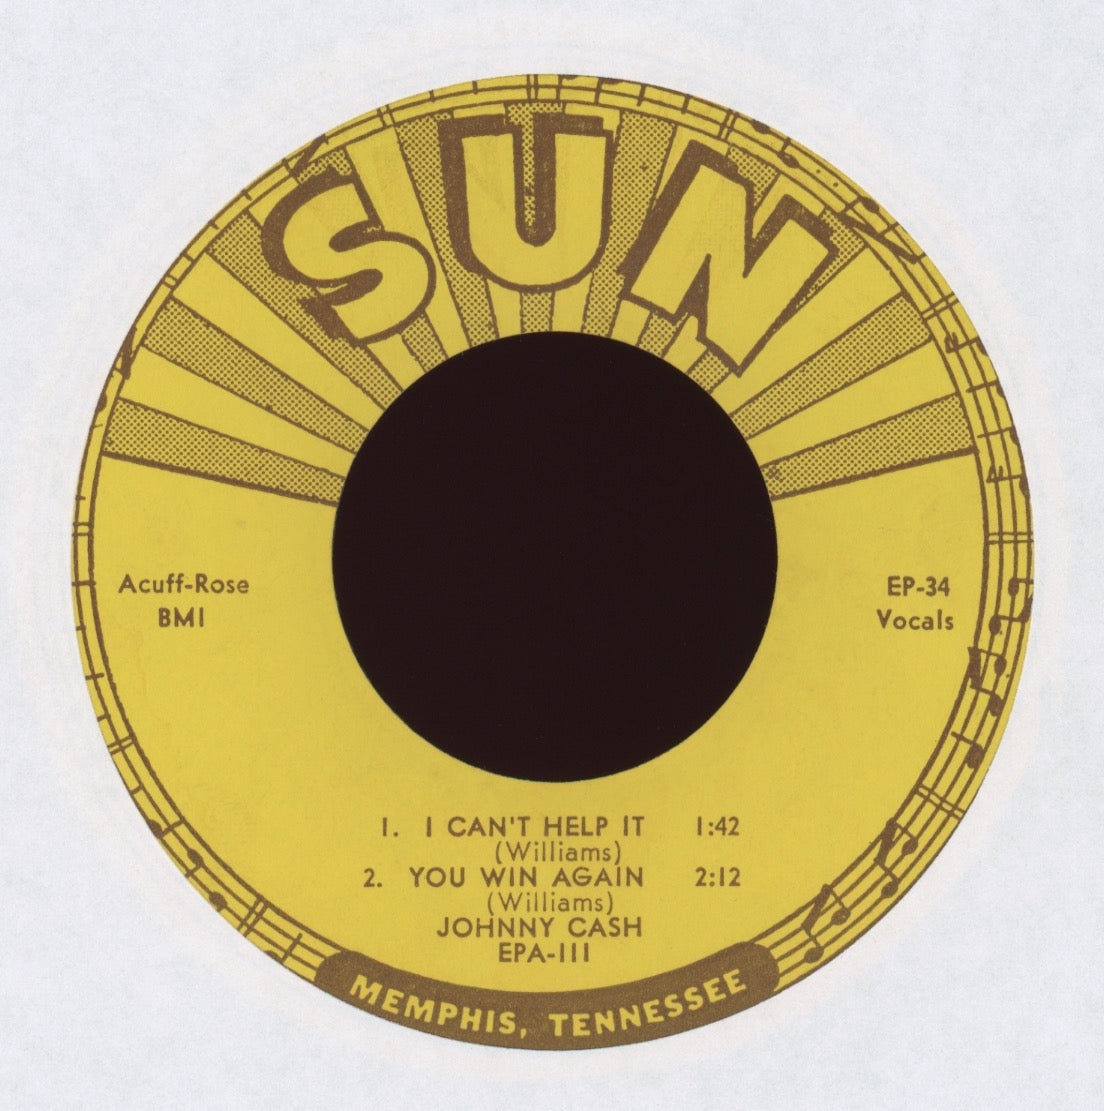 Johnny Cash - Johnny Cash Sings Hank Williams on Sun EP 111